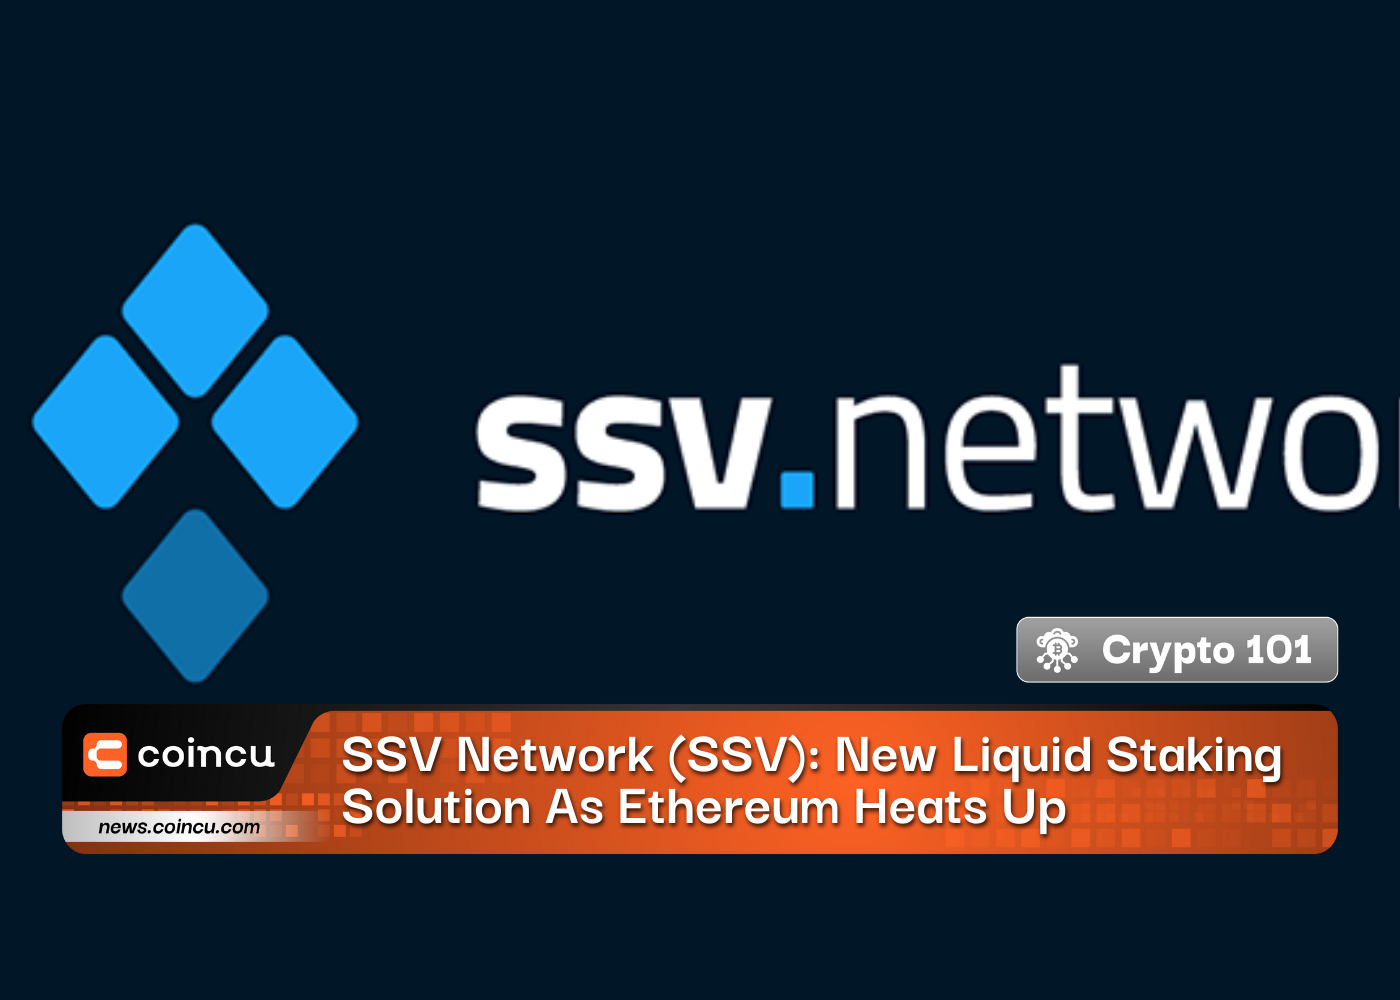 SSV Network (SSV): New Liquid Staking Solution As Ethereum Heats Up